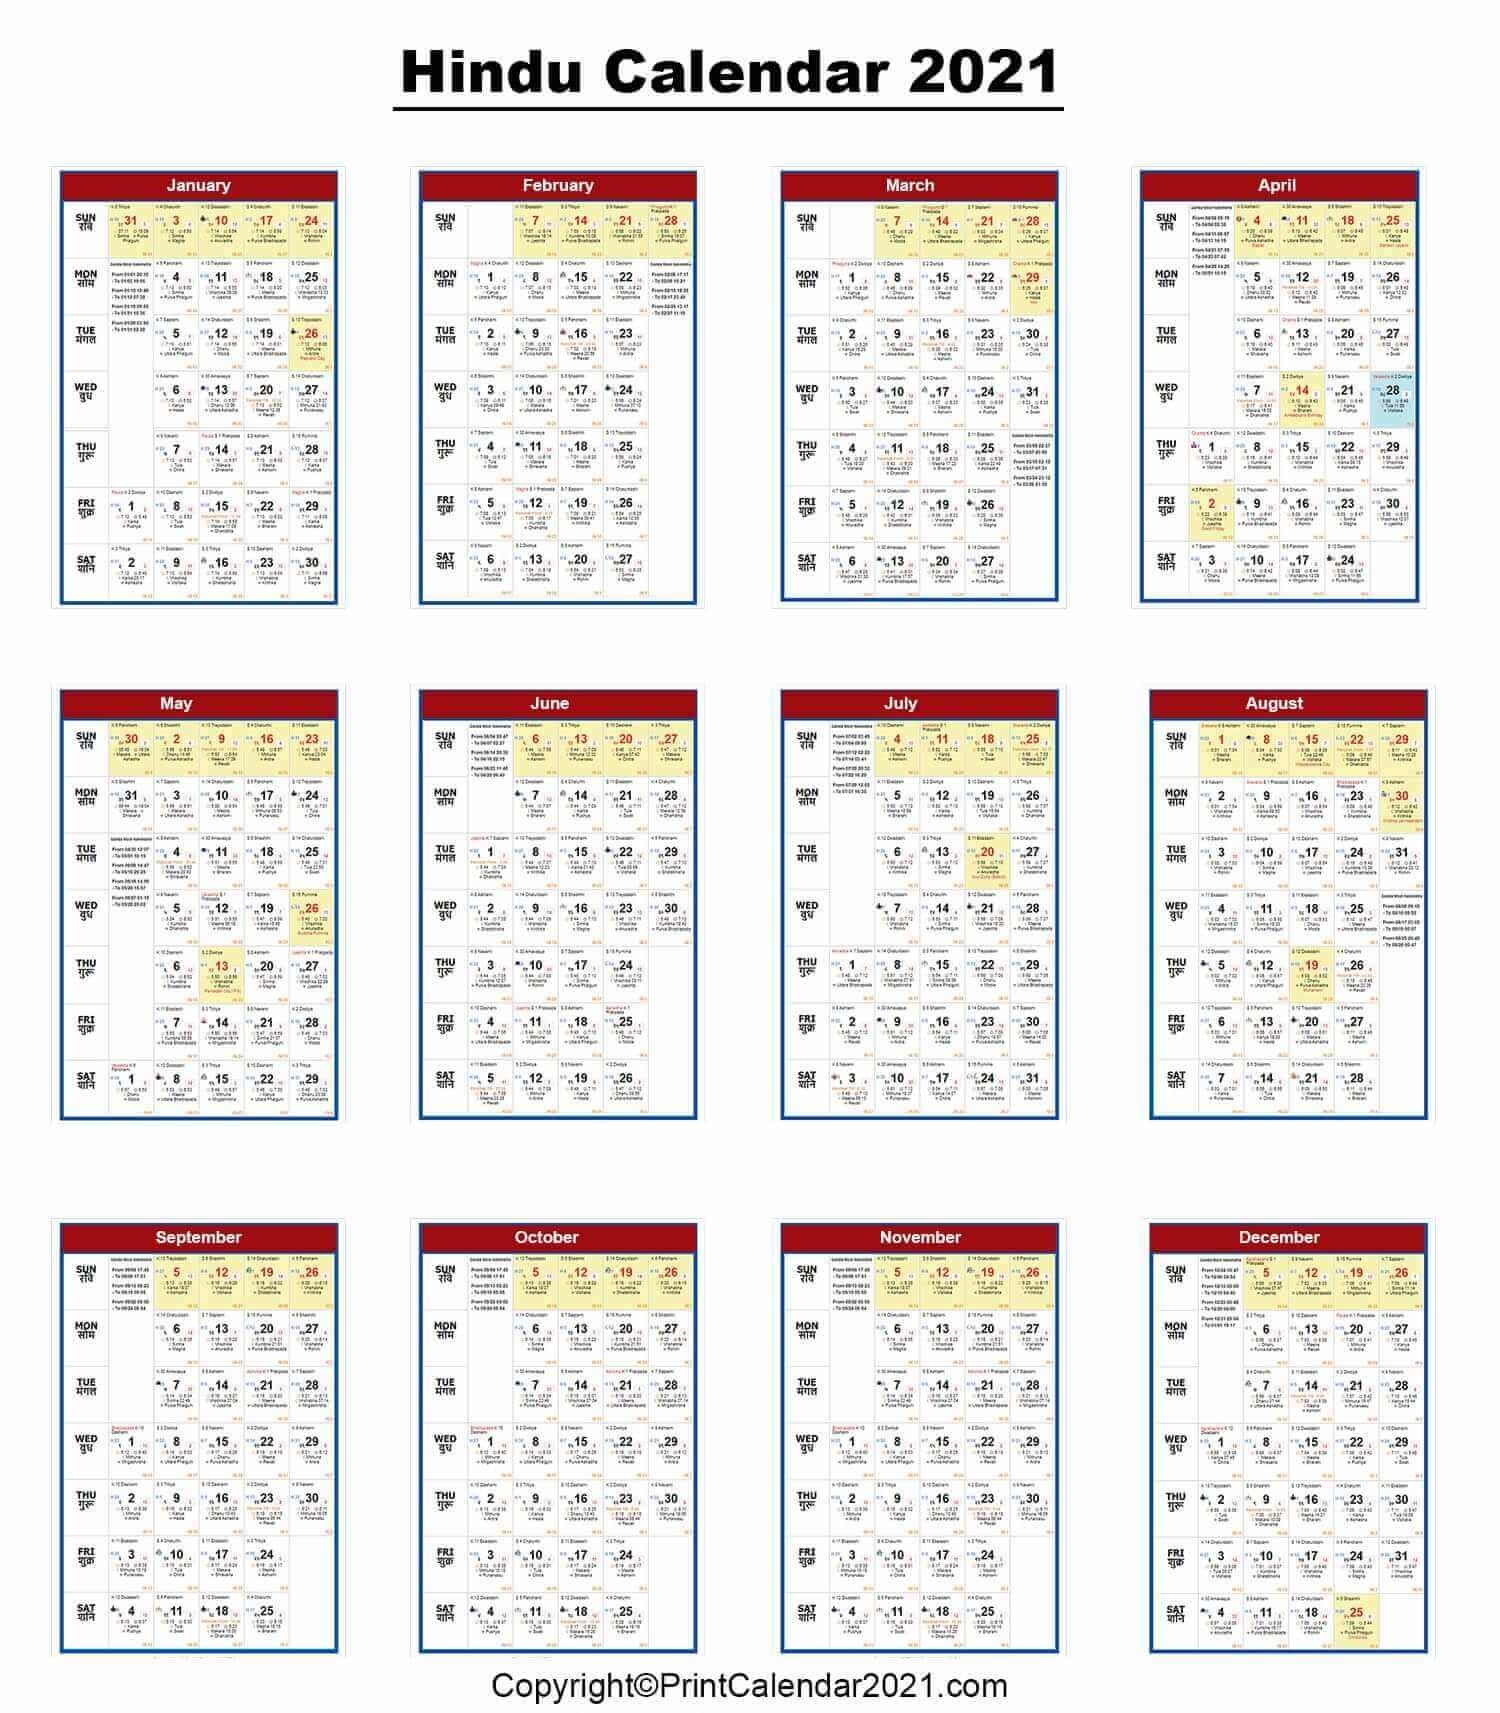 Hindu Calendar 2021 With Tithi September 2021 Hindu Calendar